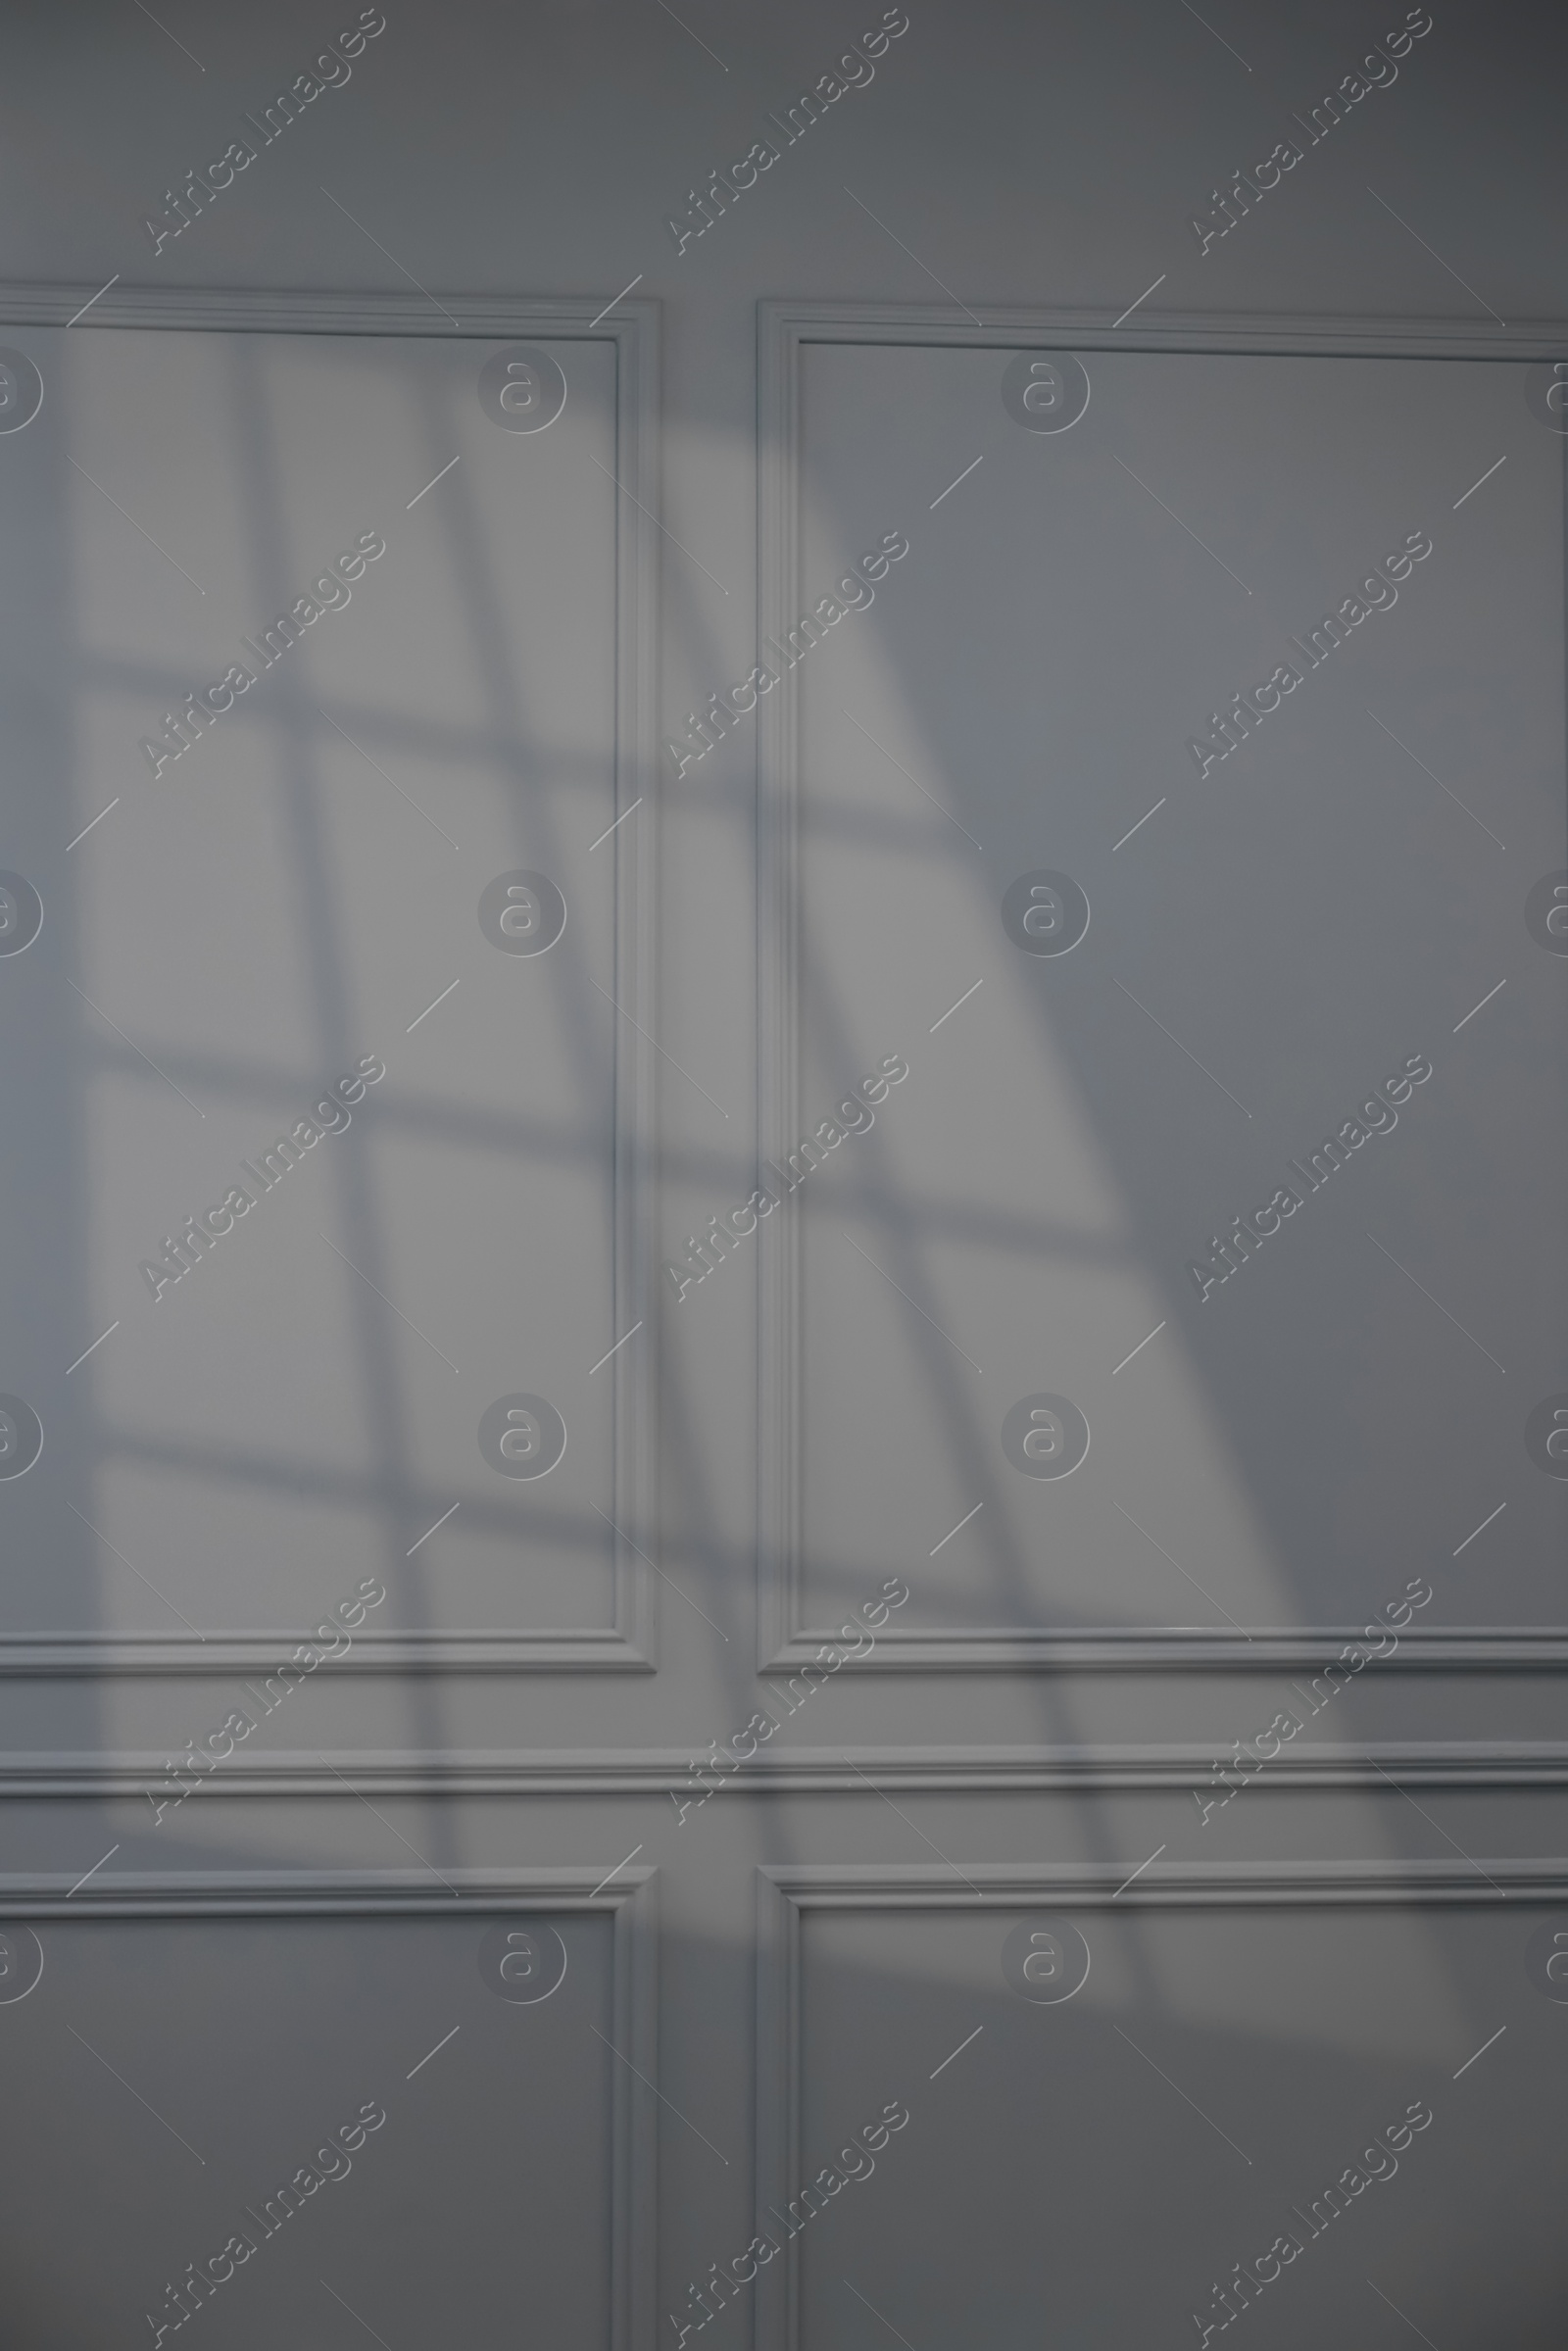 Photo of Shadow from window on grey wall indoors